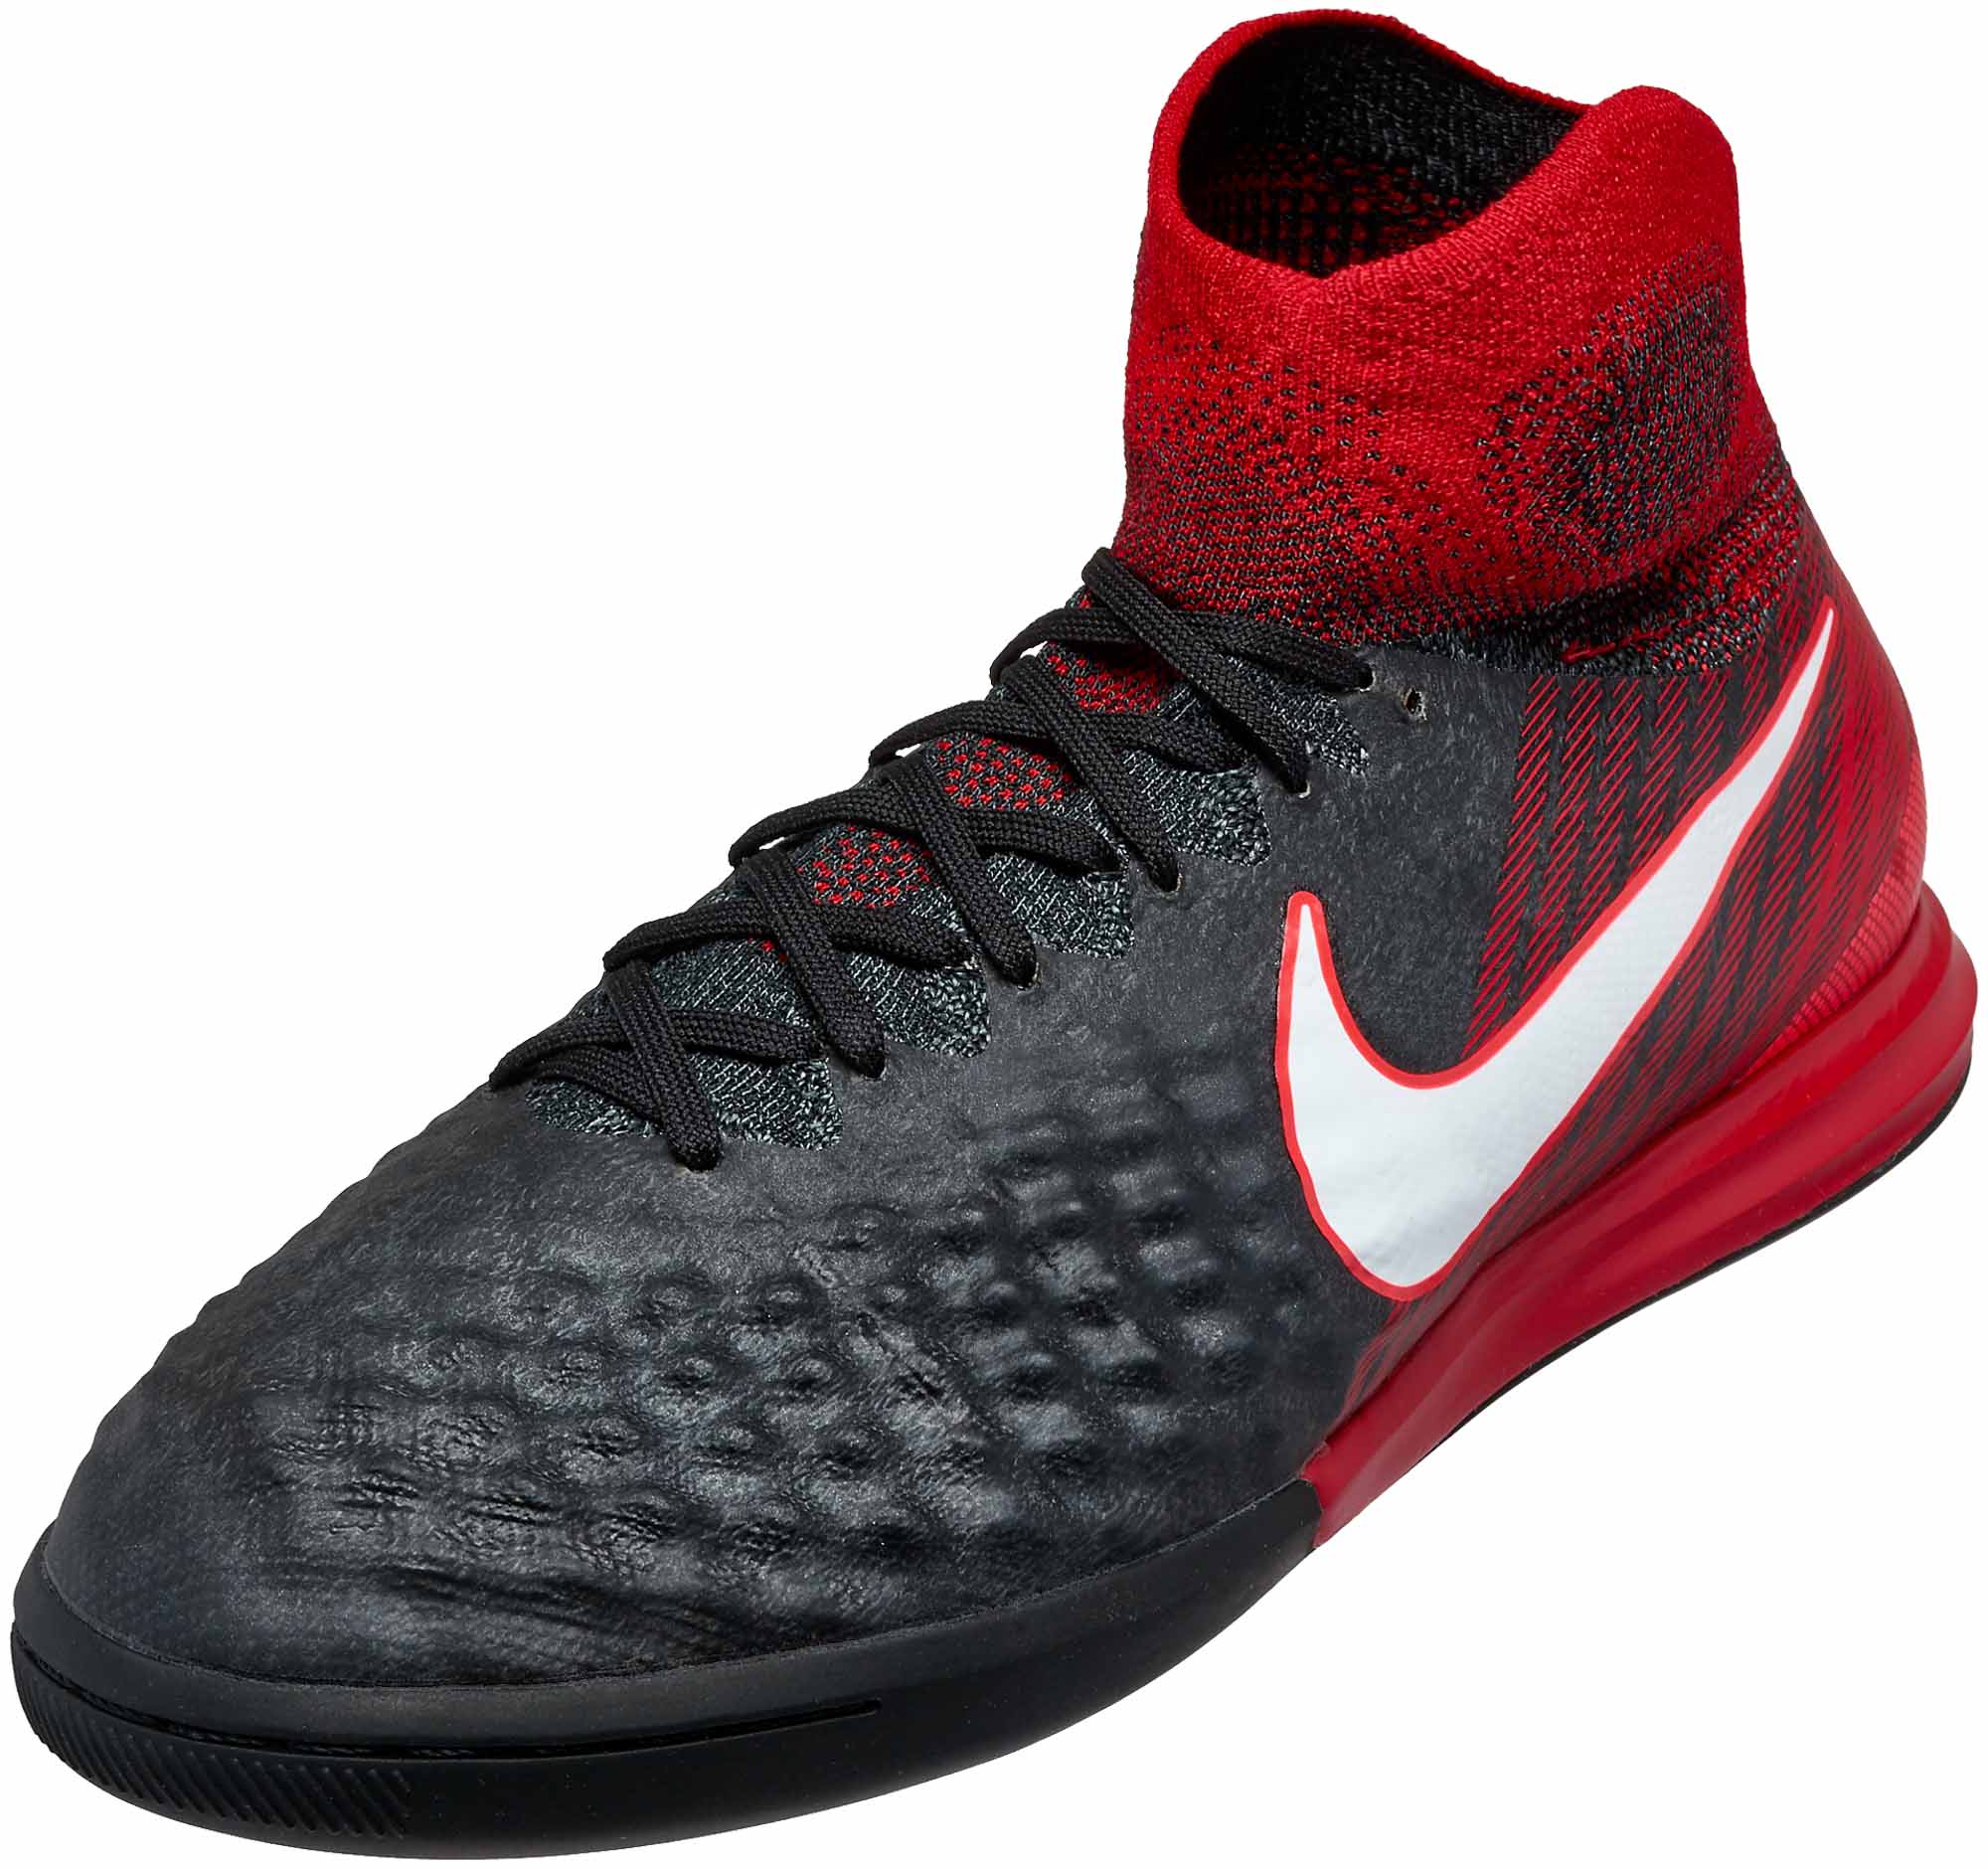 Nike MagistaX Proximo II IC - Black Indoor Soccer Shoes